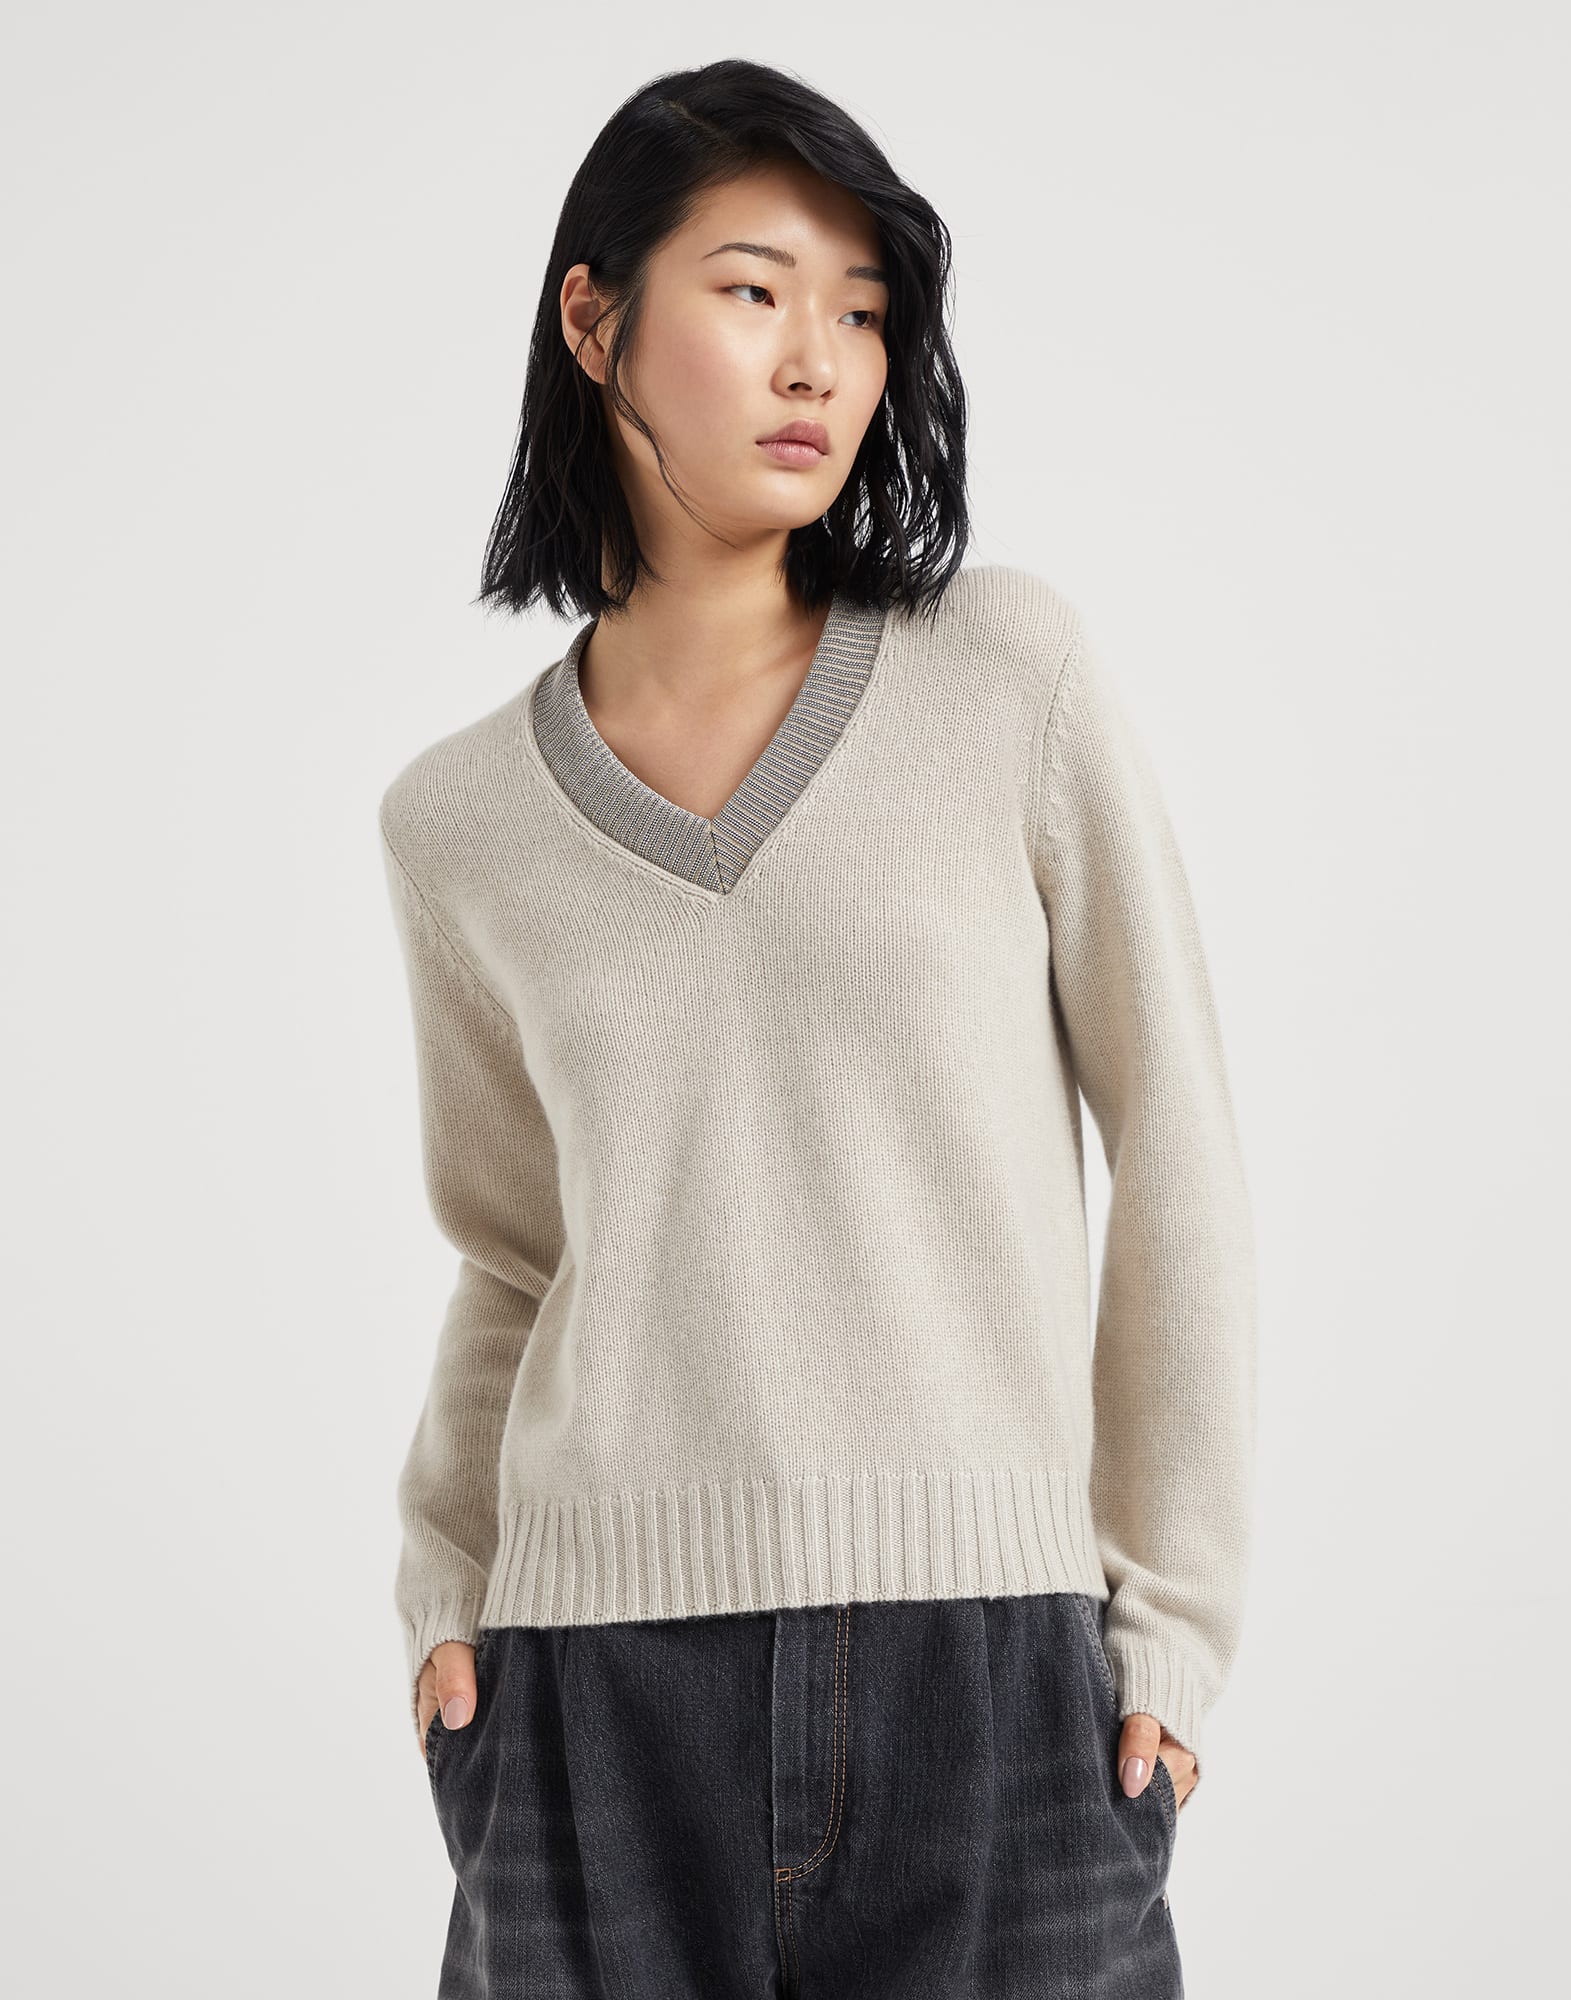 Cashmere sweater with monili